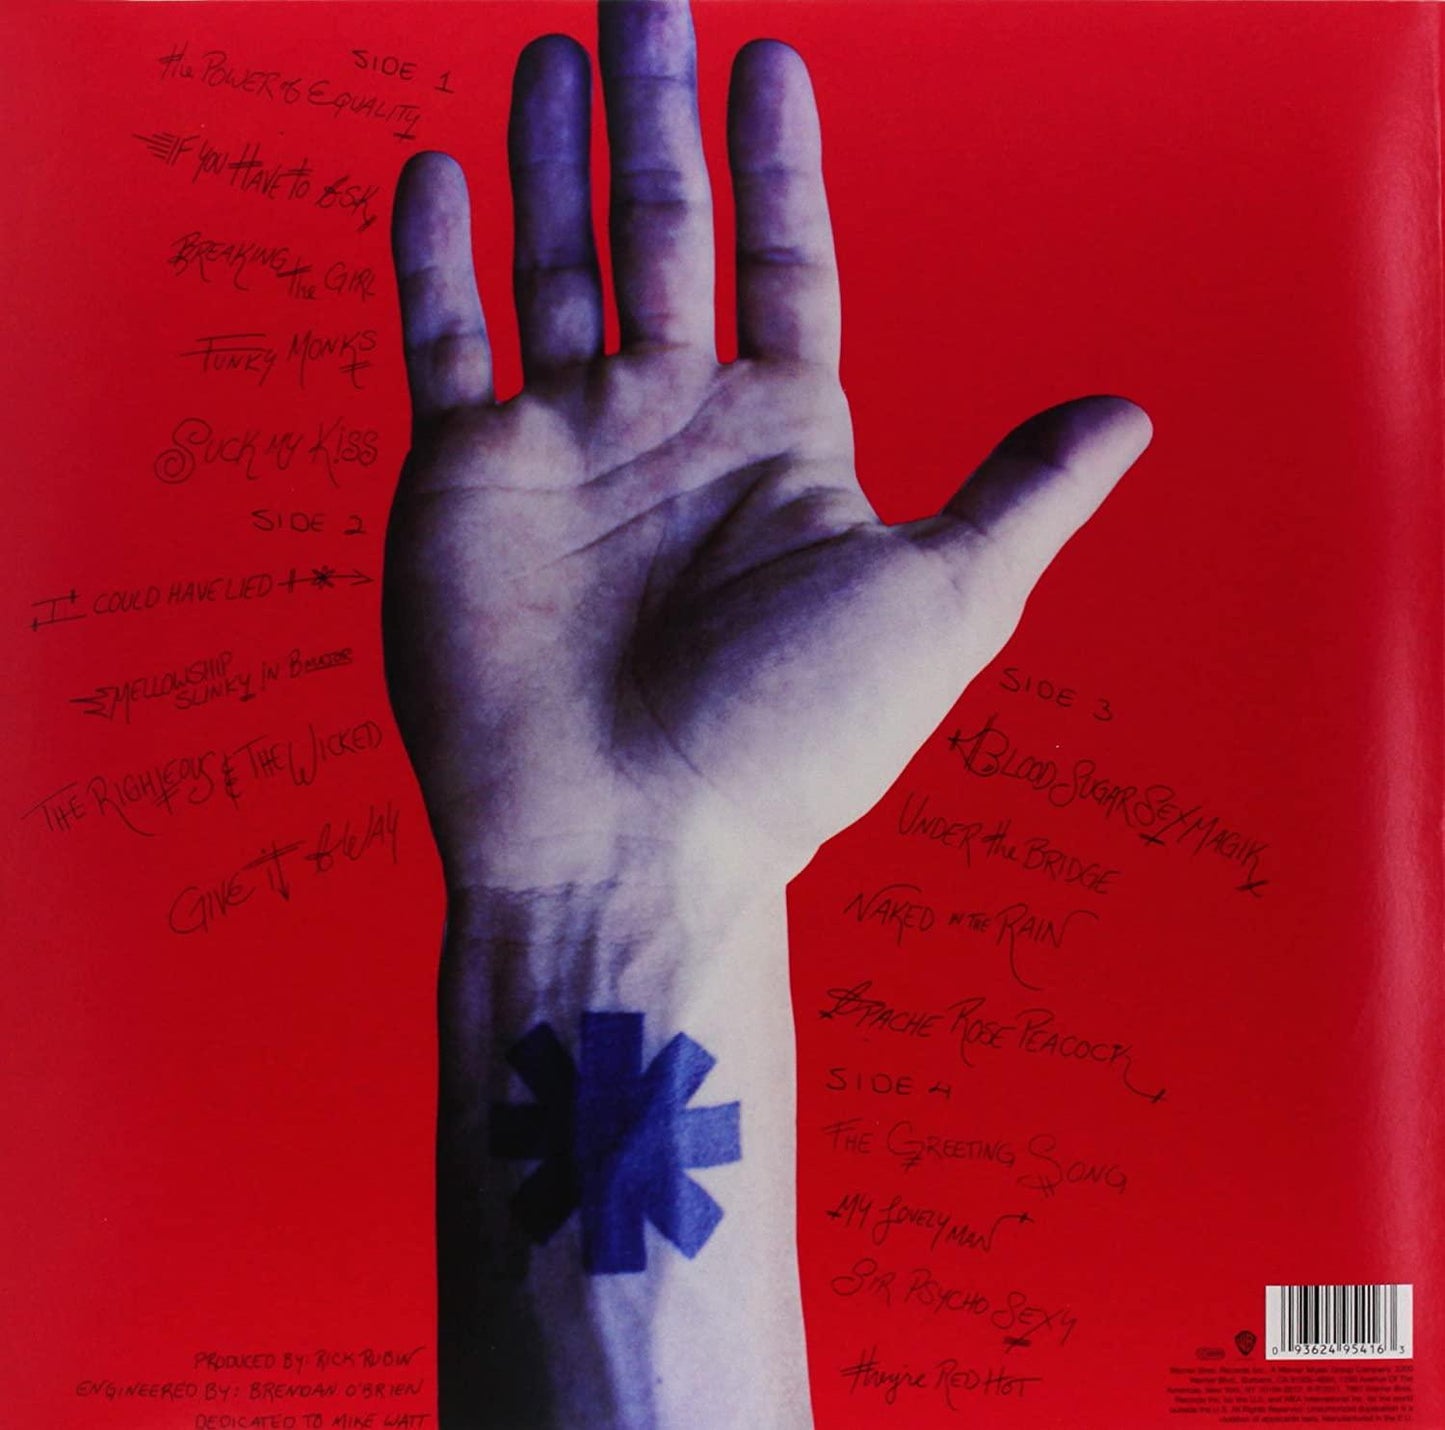 Red Hot Chili Peppers - Blood Sugar Sex Magik (Remastered, 180 Gram) (2 LP) - Joco Records